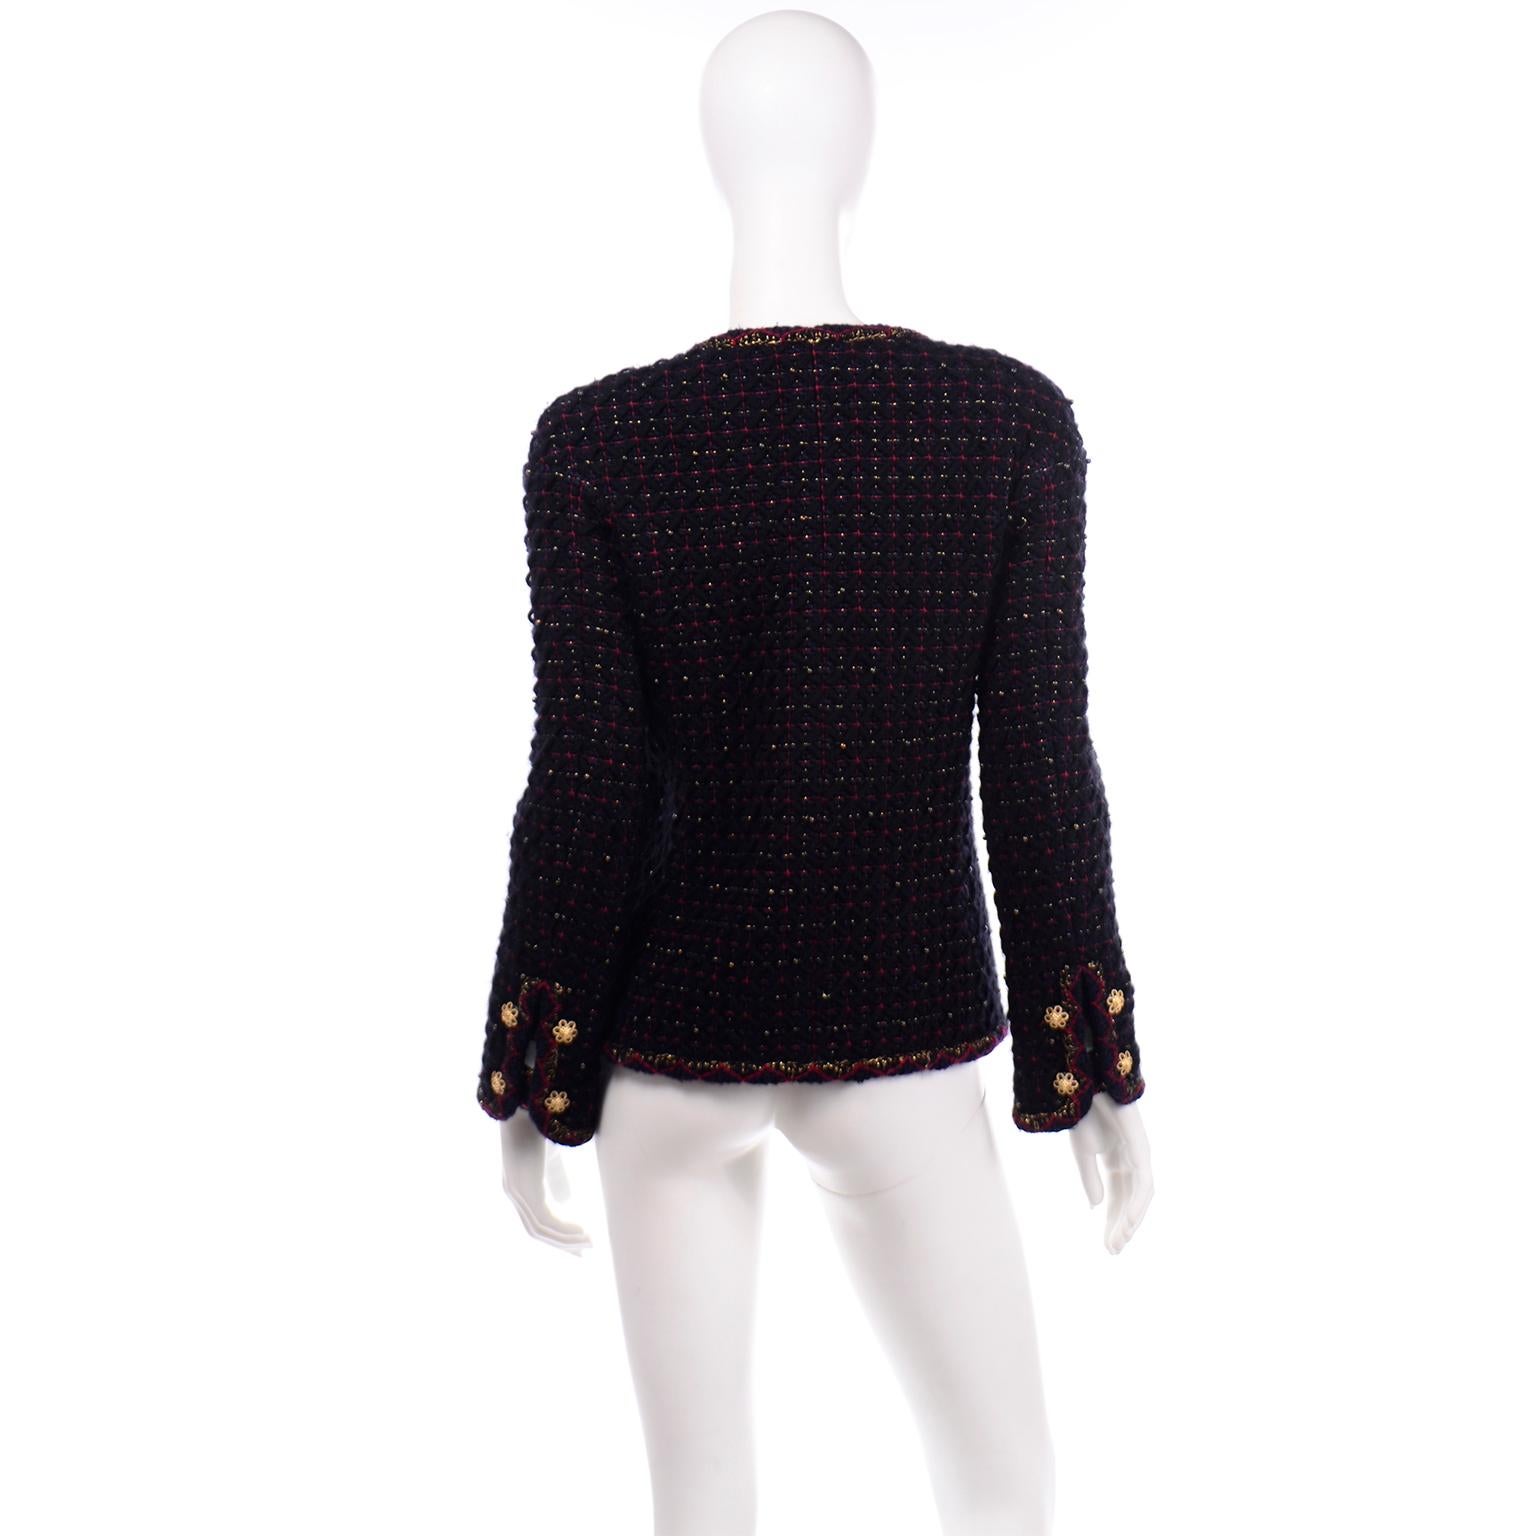 Black Chanel 2015 Paris Salzburg Collection $14250 Tweed Documented Runway Jacket